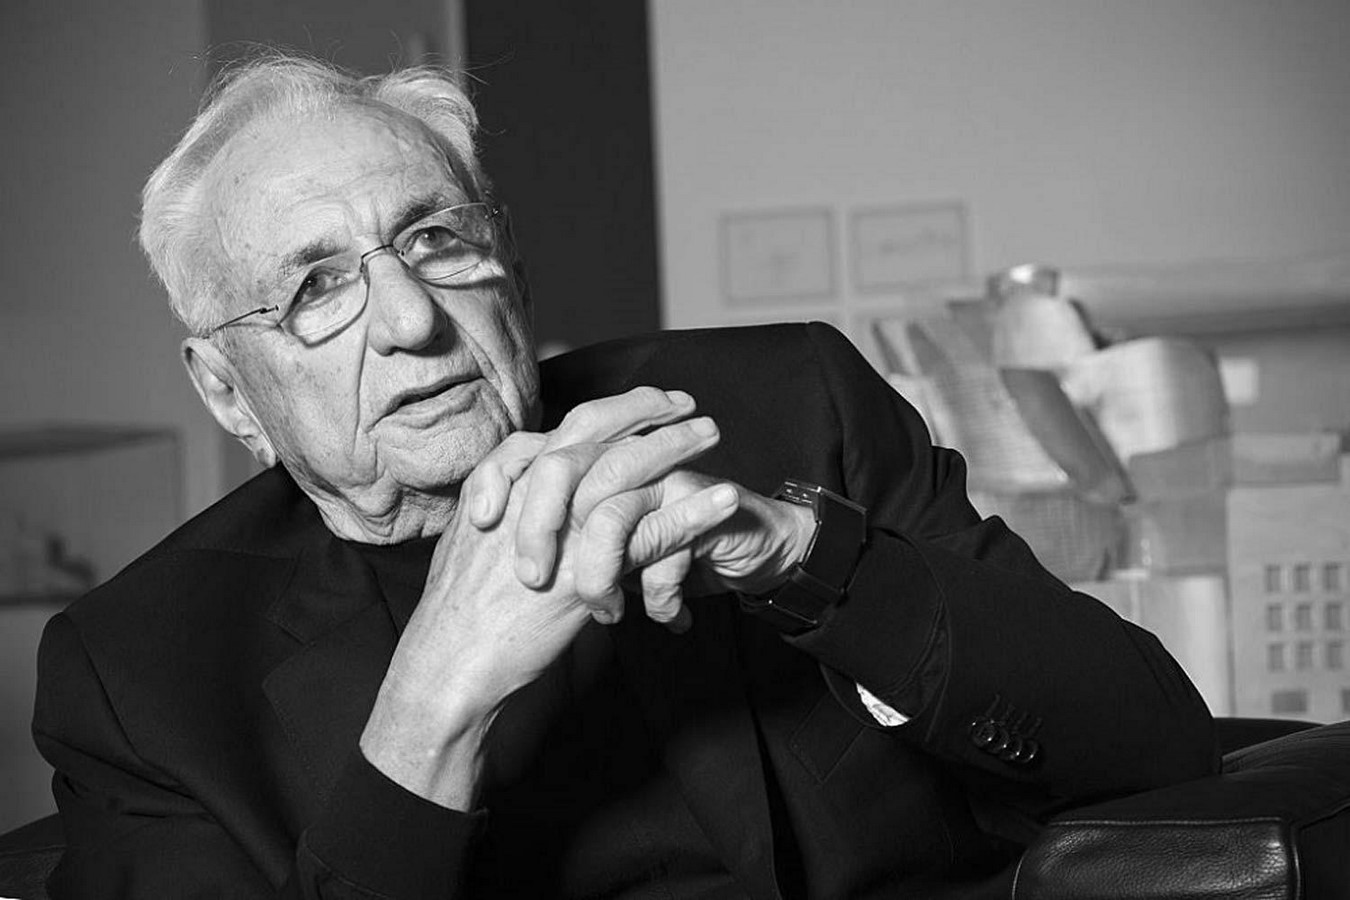 Frank Gehry: The Deconstructivist Architect Who Creates Sculptural Buildings - Sheet3